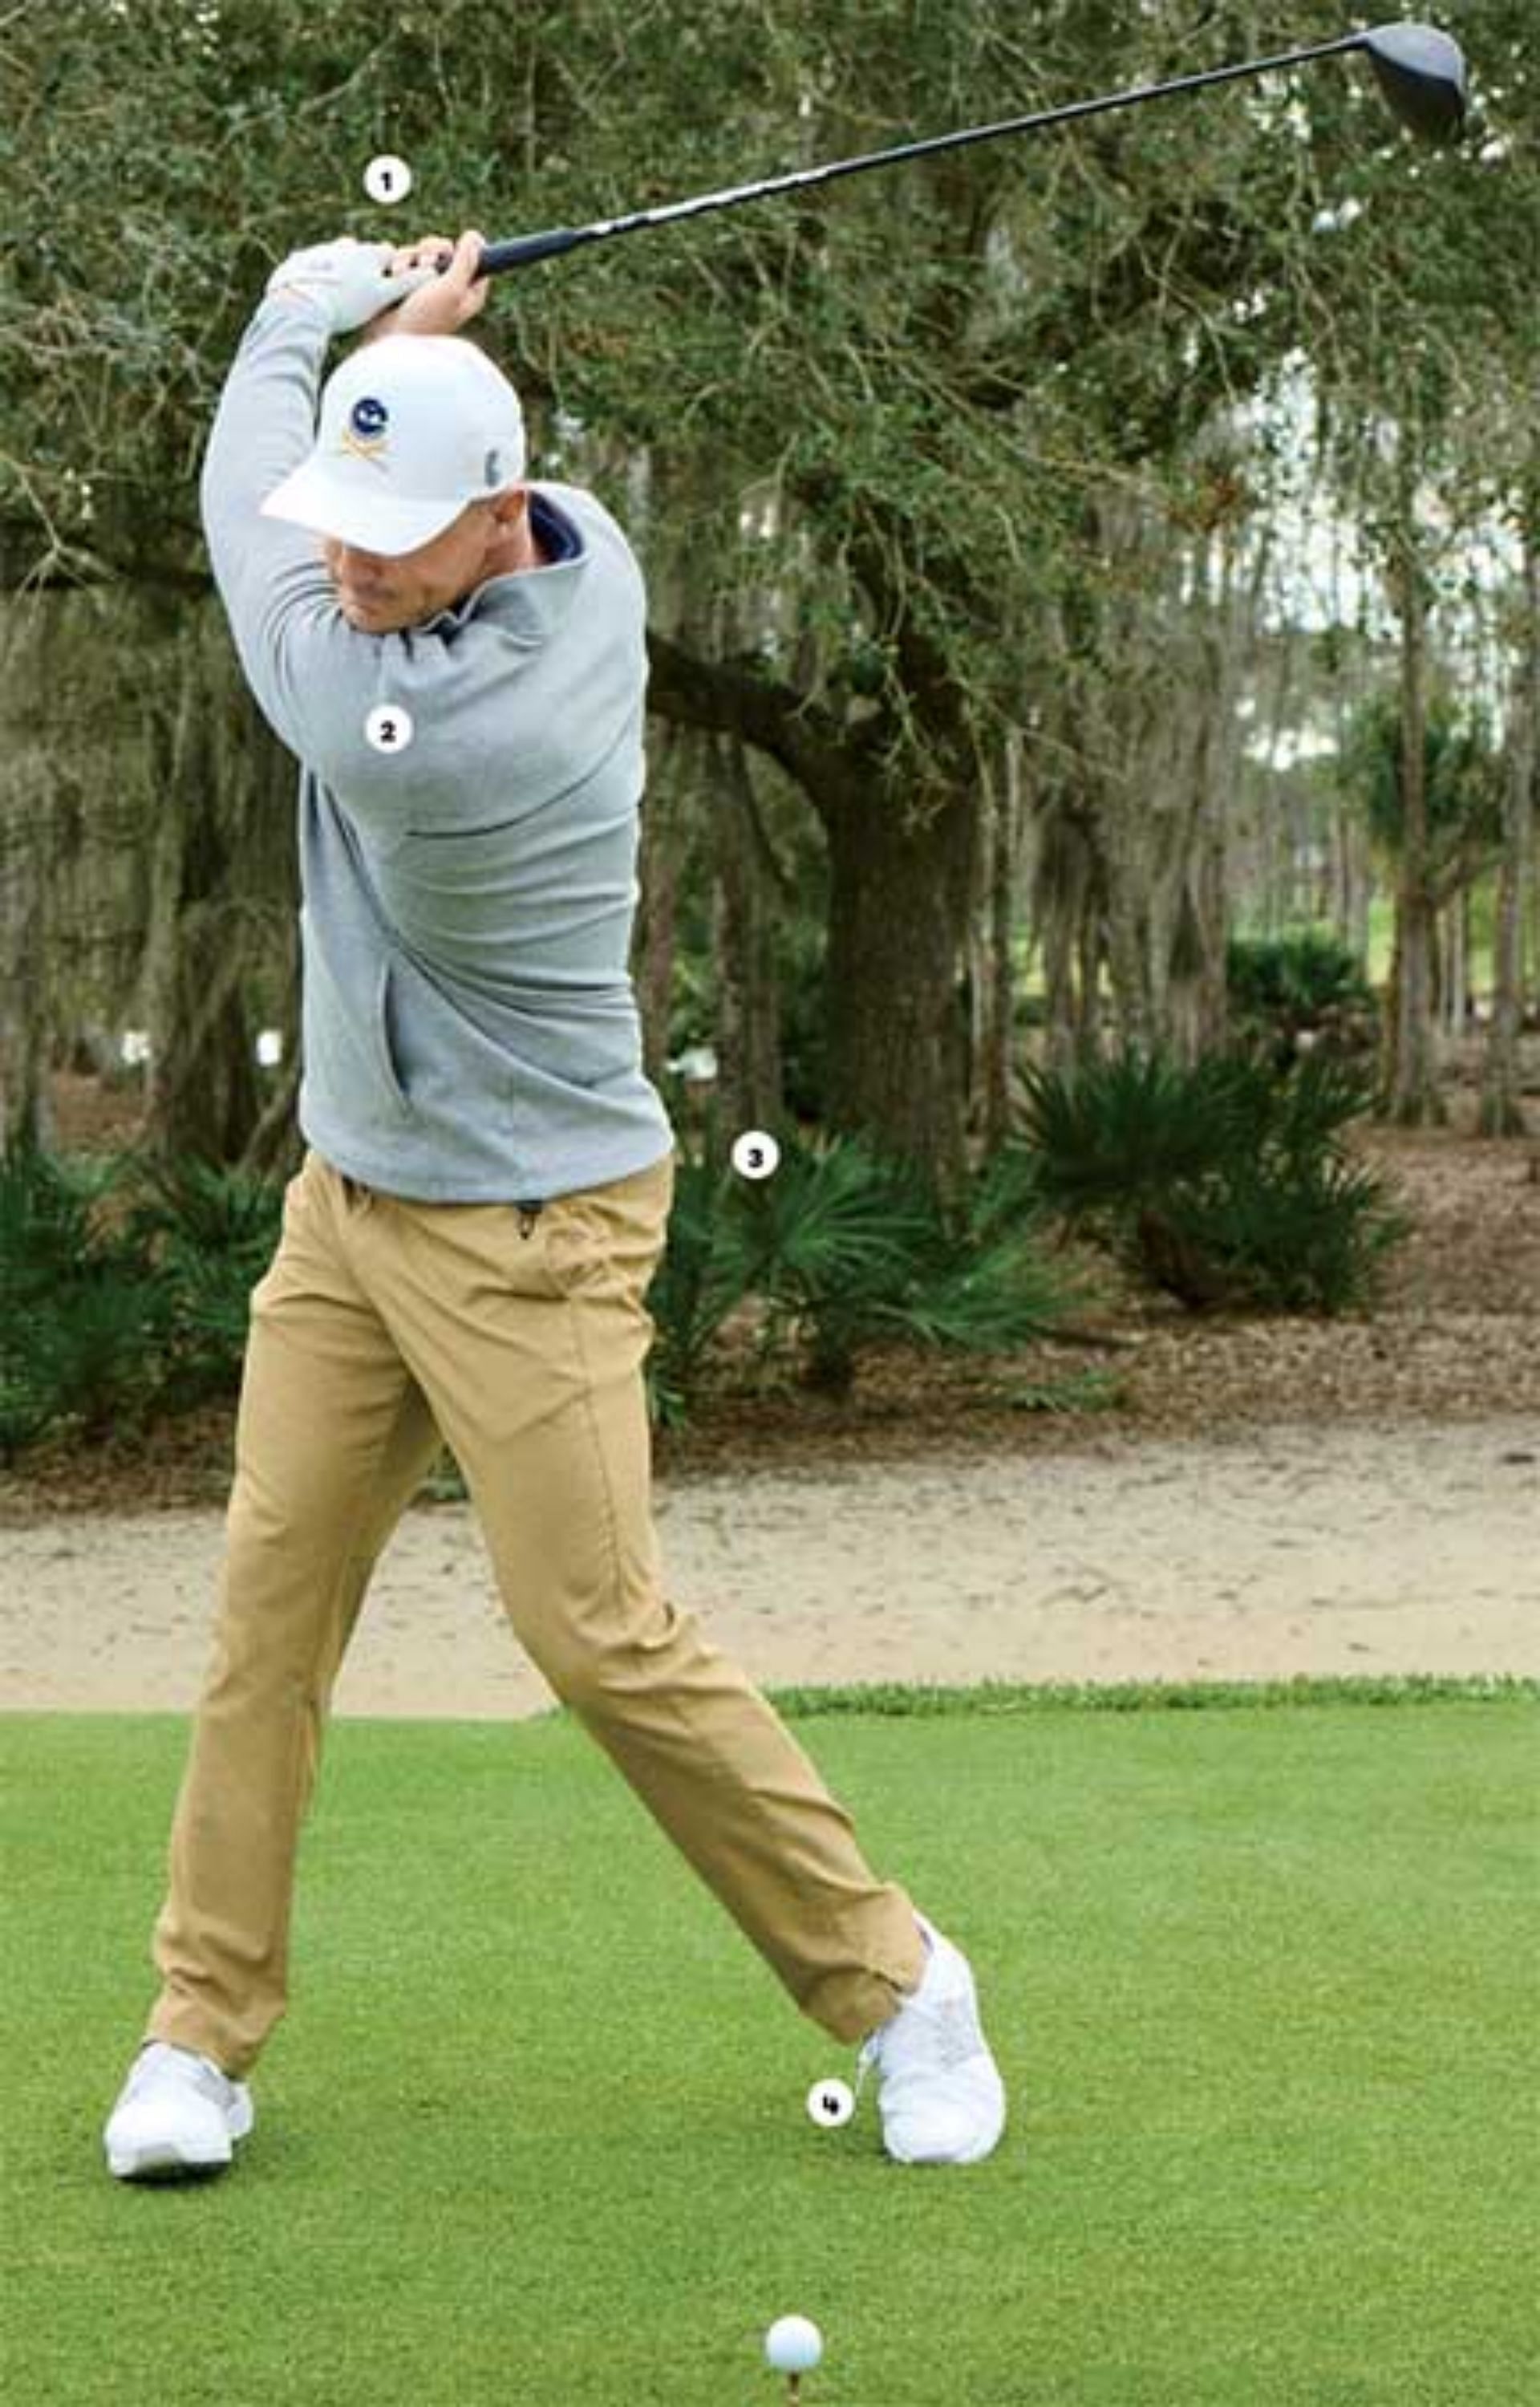 Bryson DeChambeau hits a drive shot (Image via Michael Schwartz for Golf.com).